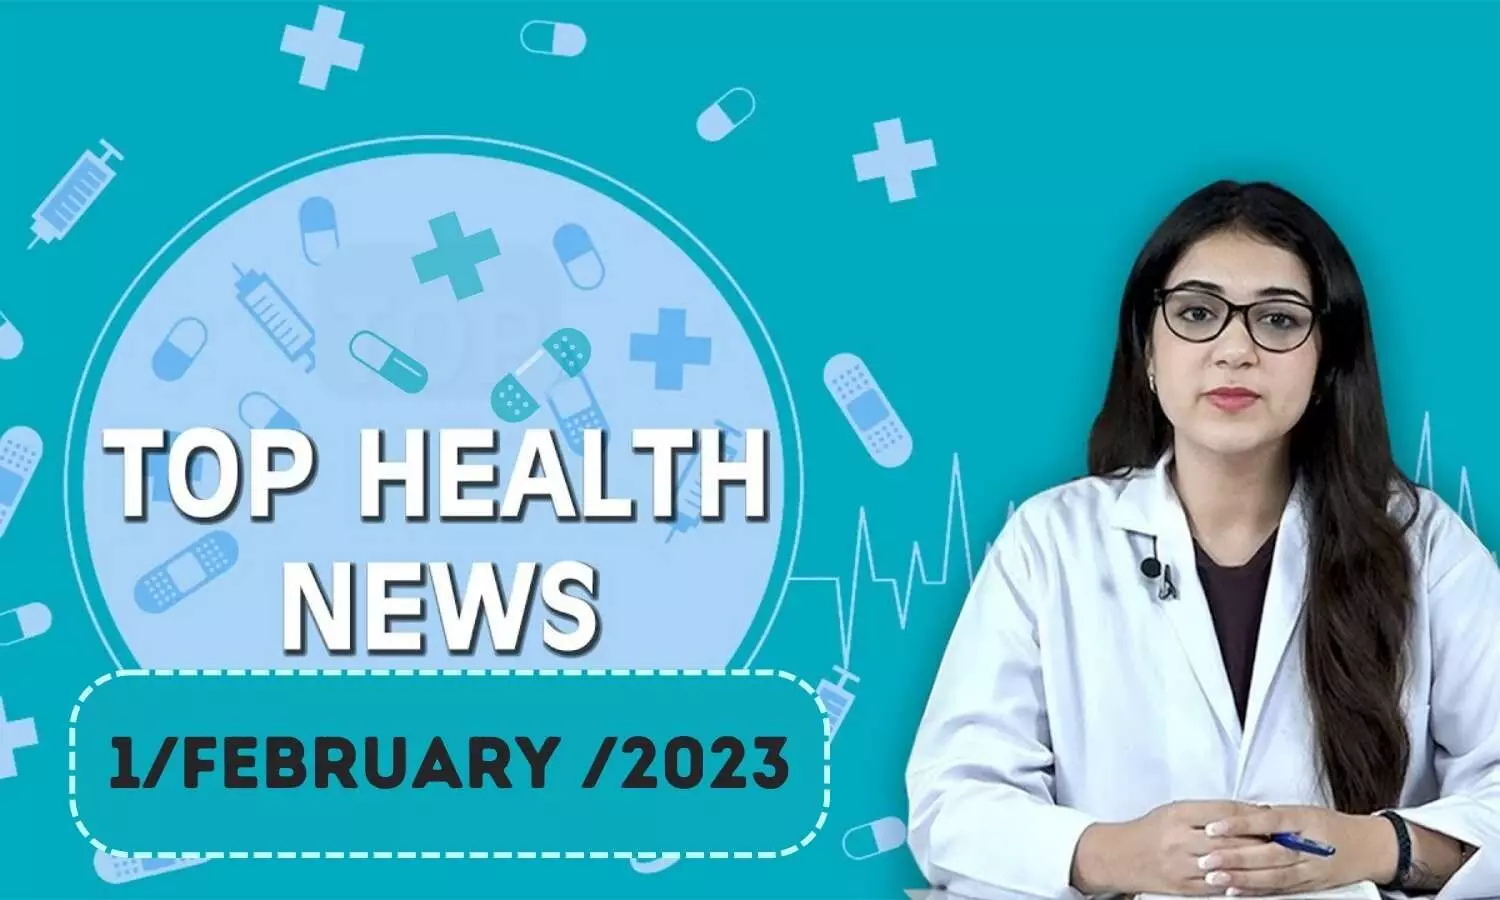 Health Bulletin 1/February/2023